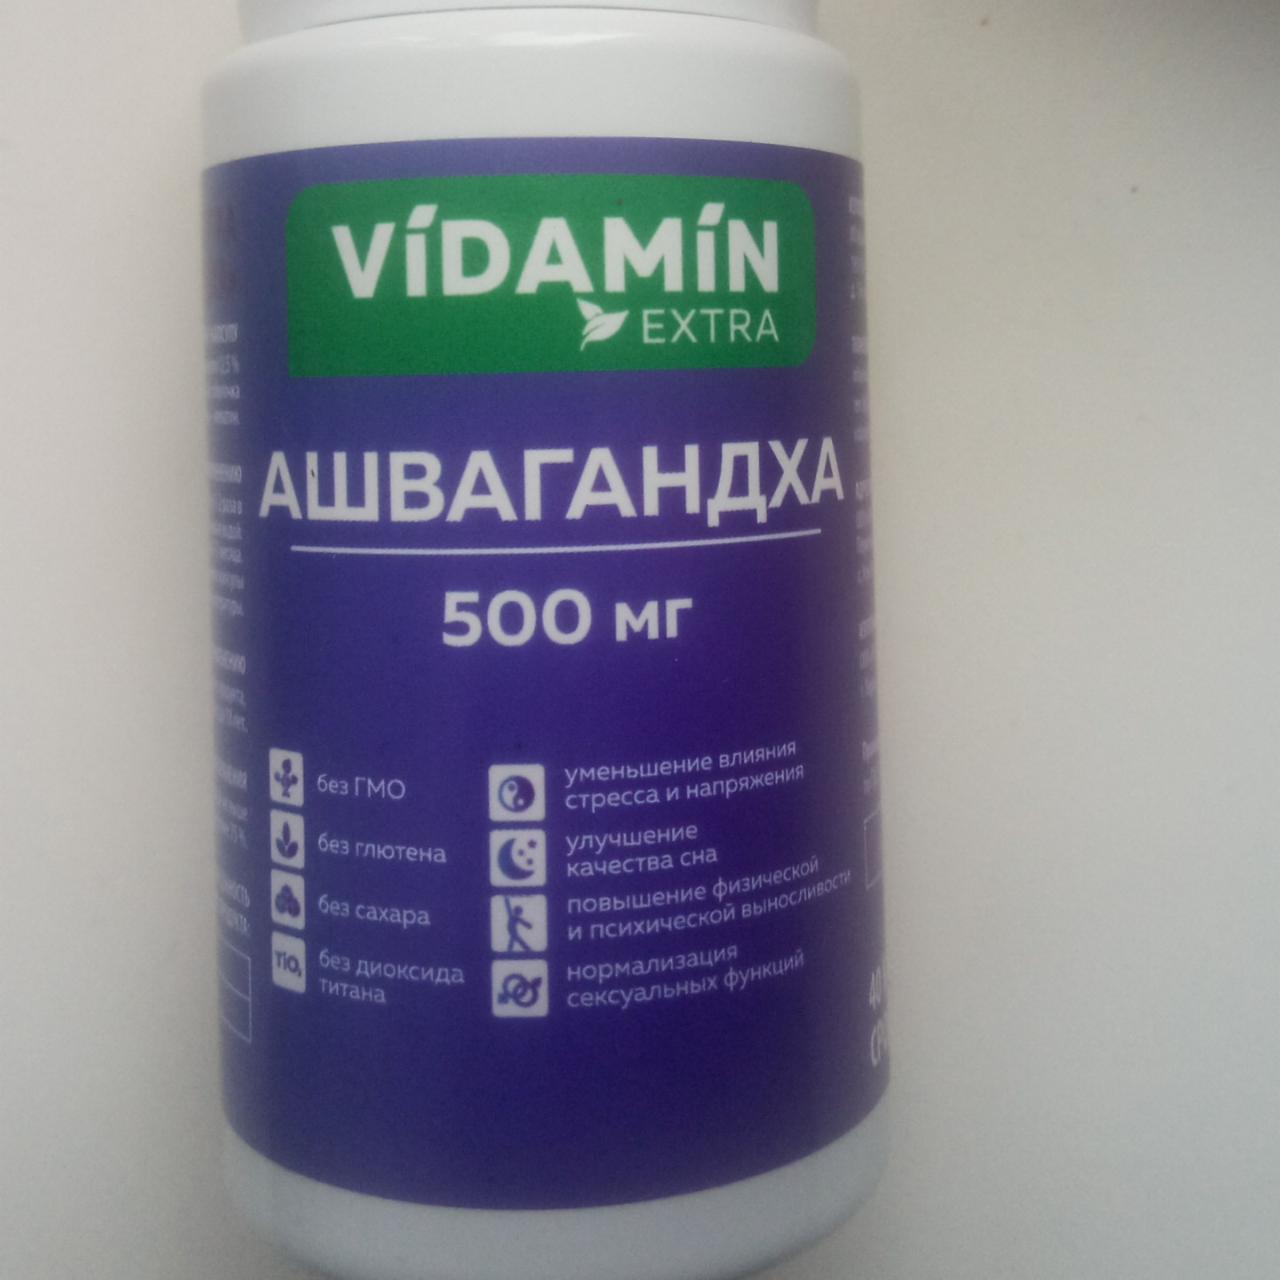 Фото - АШВАГАНДХА 500 мг VIDAMIN EXTRA